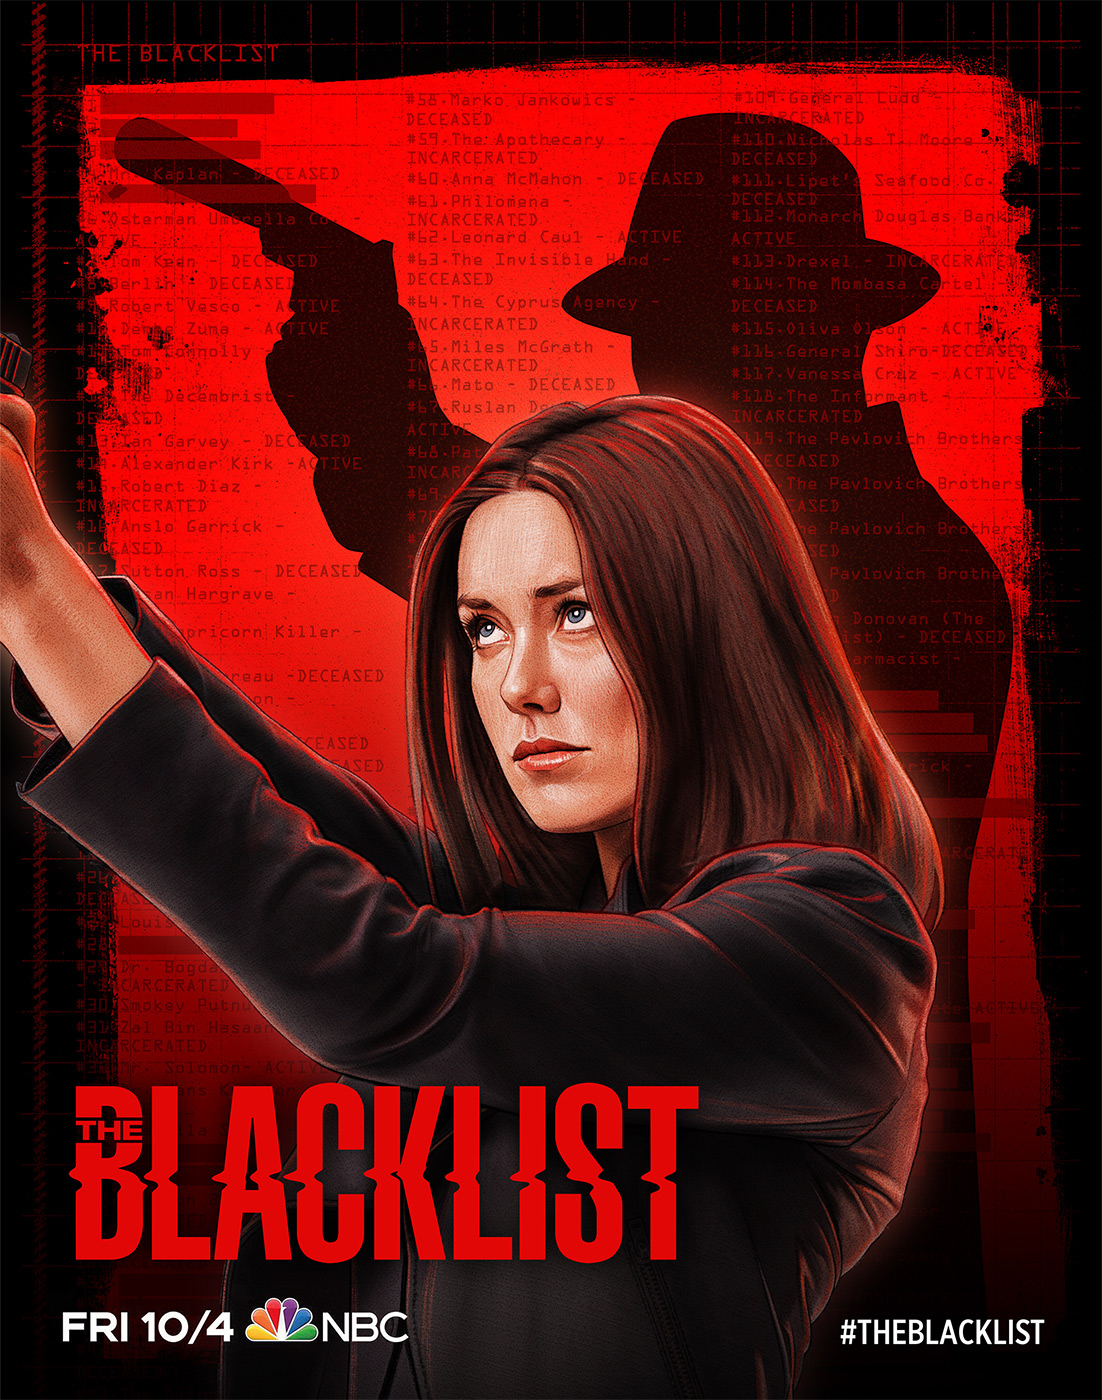 The Blacklist - Season 7 Poster by Kyle Lambert